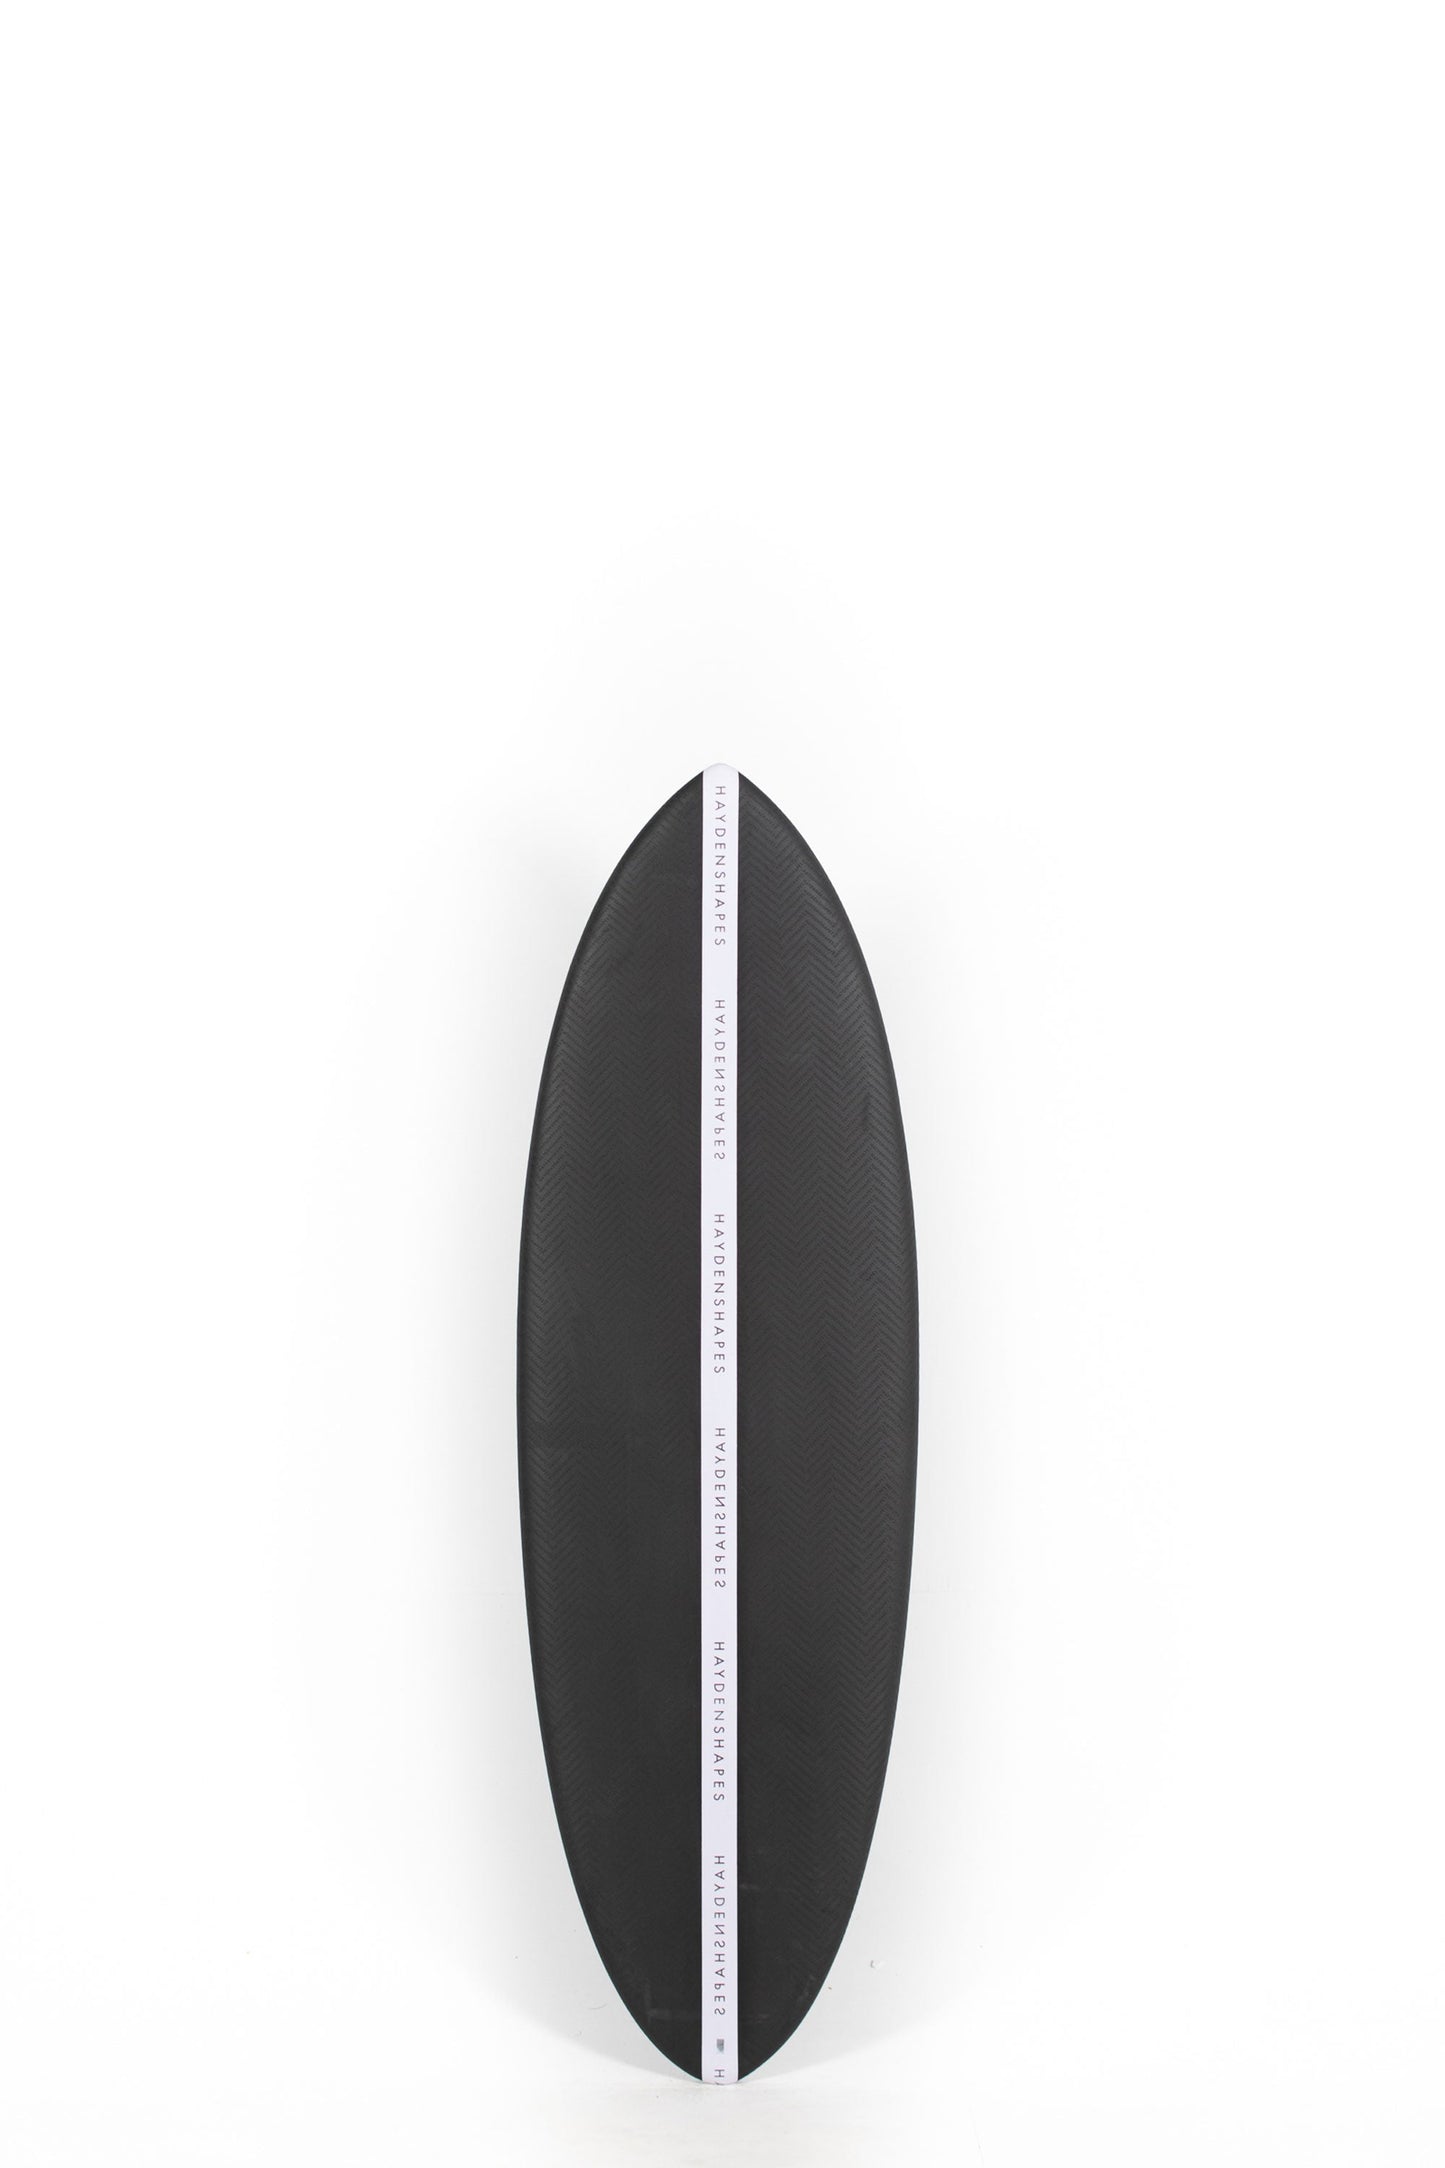 Pukas Surf Shop - HaydenShapes Surfboard - HYPTO KRIPTO SOFT - 5'8" X 20 1/2" X 2 5/8" X 34.18L - SOFTHK-INV-FU